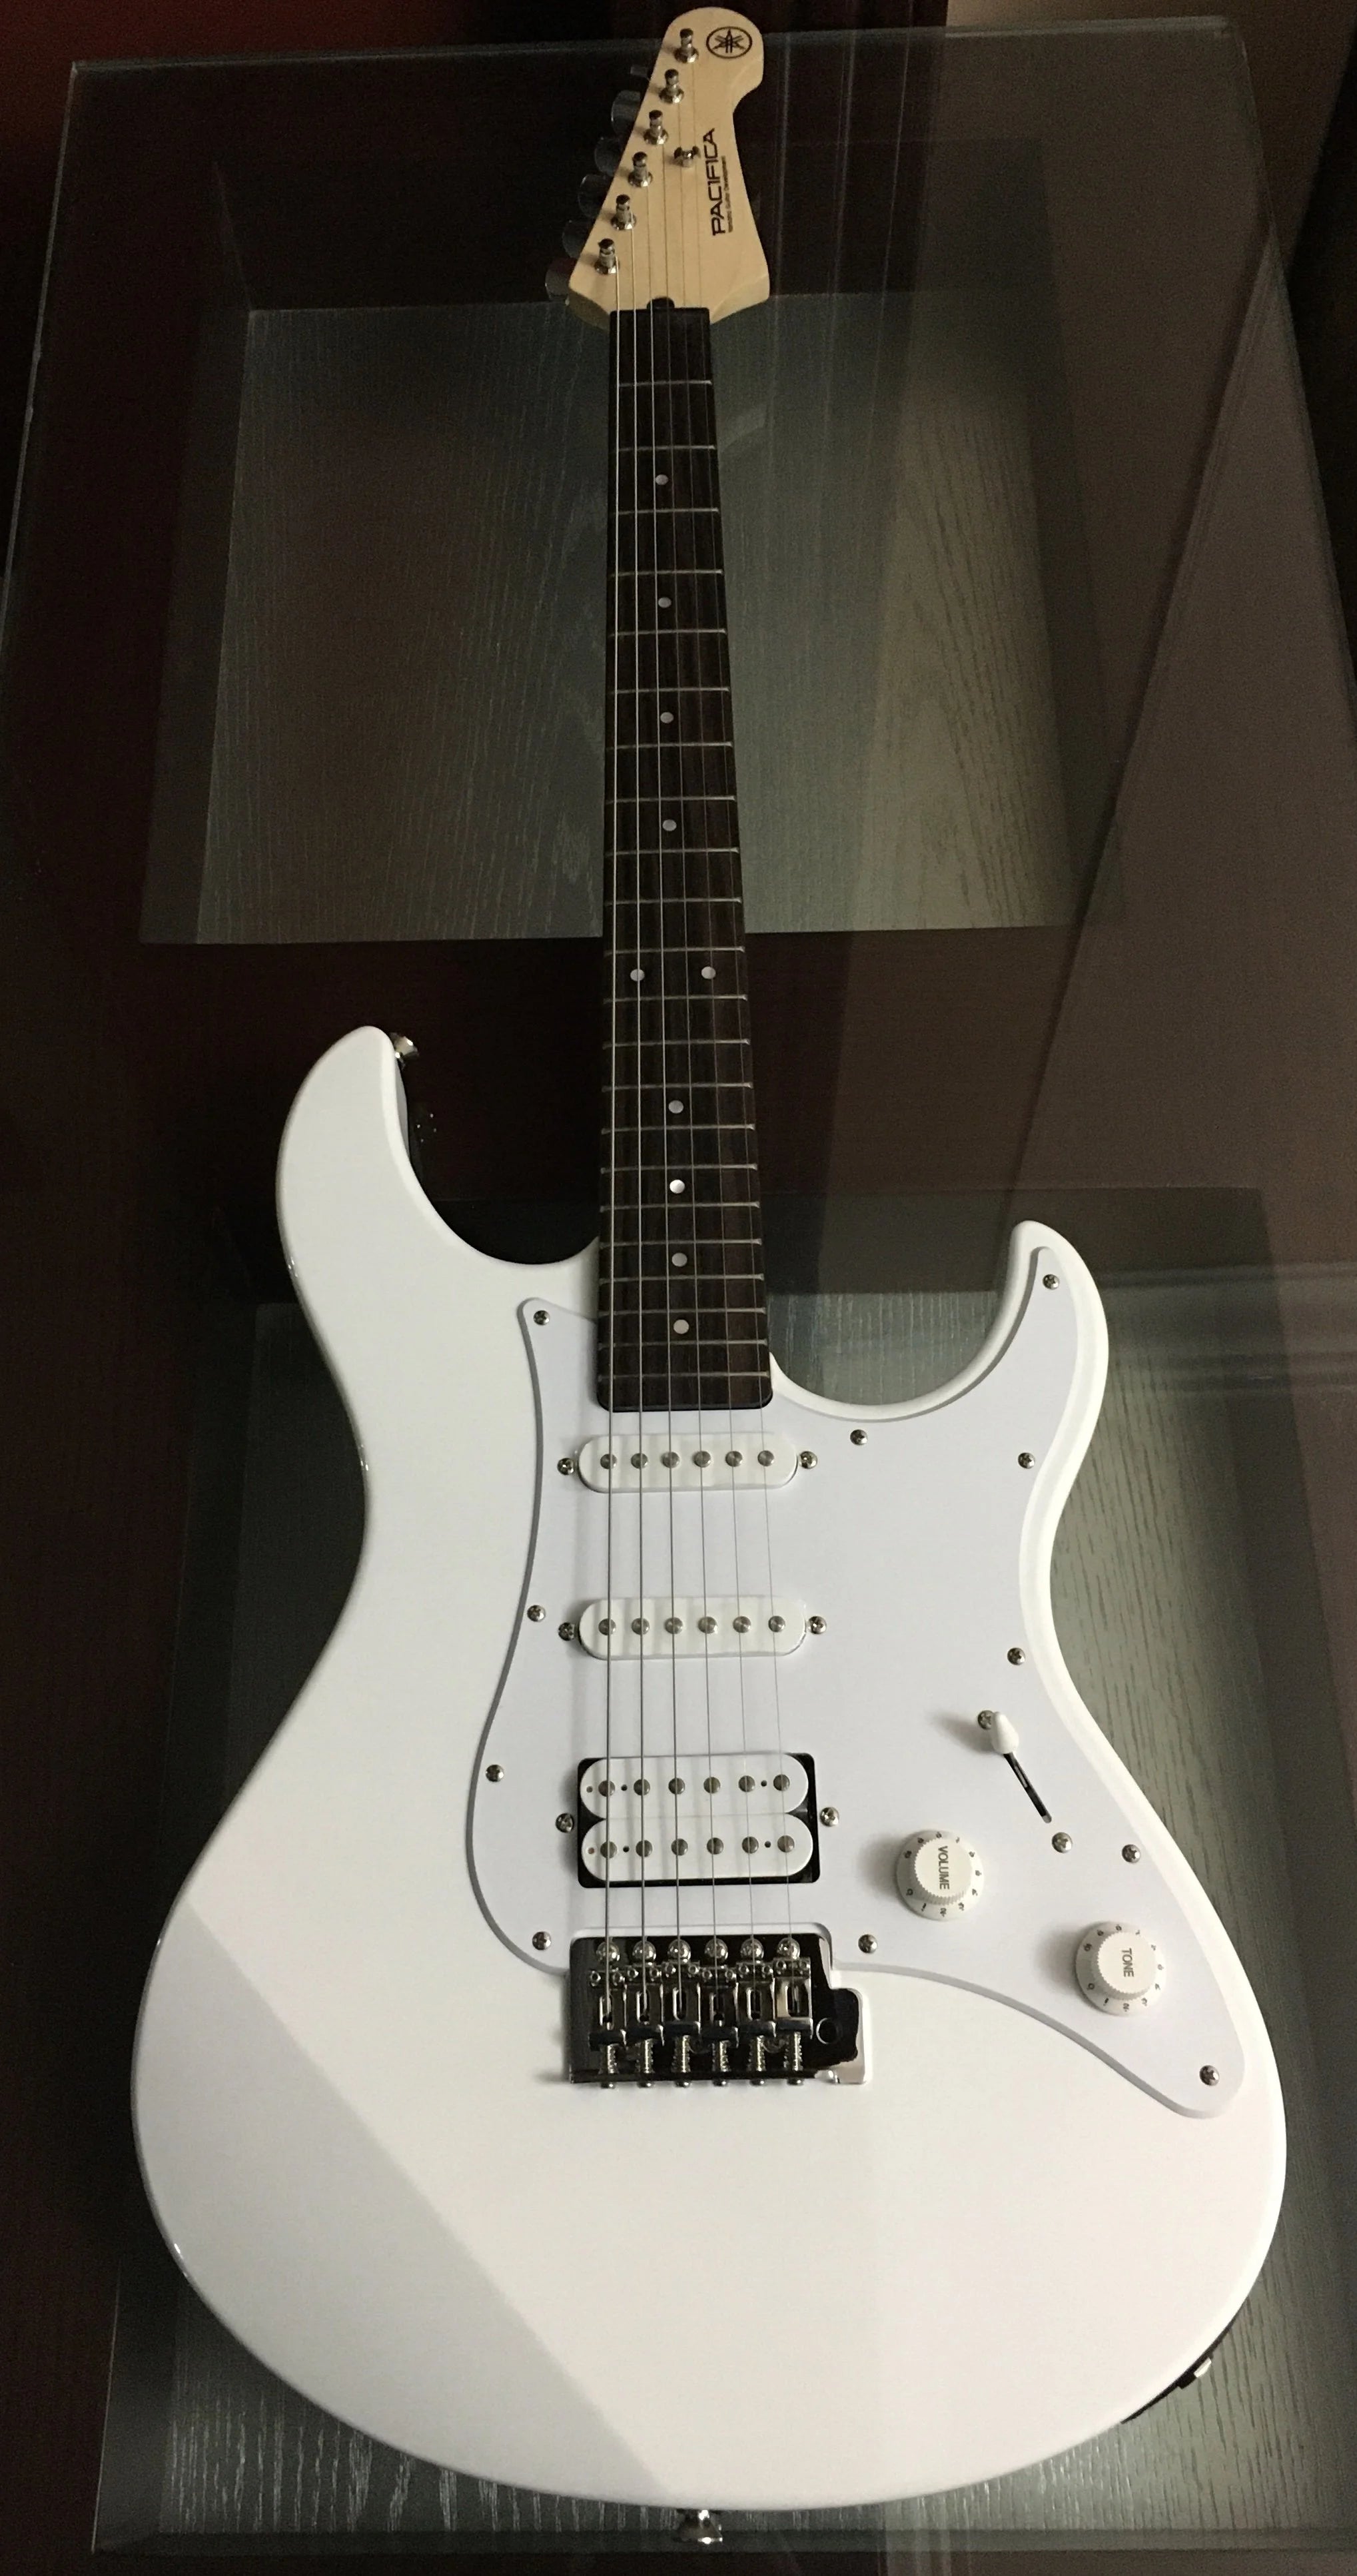 Guitarra Eléctrica Yamaha Pacifica PAC012WH-Blanca